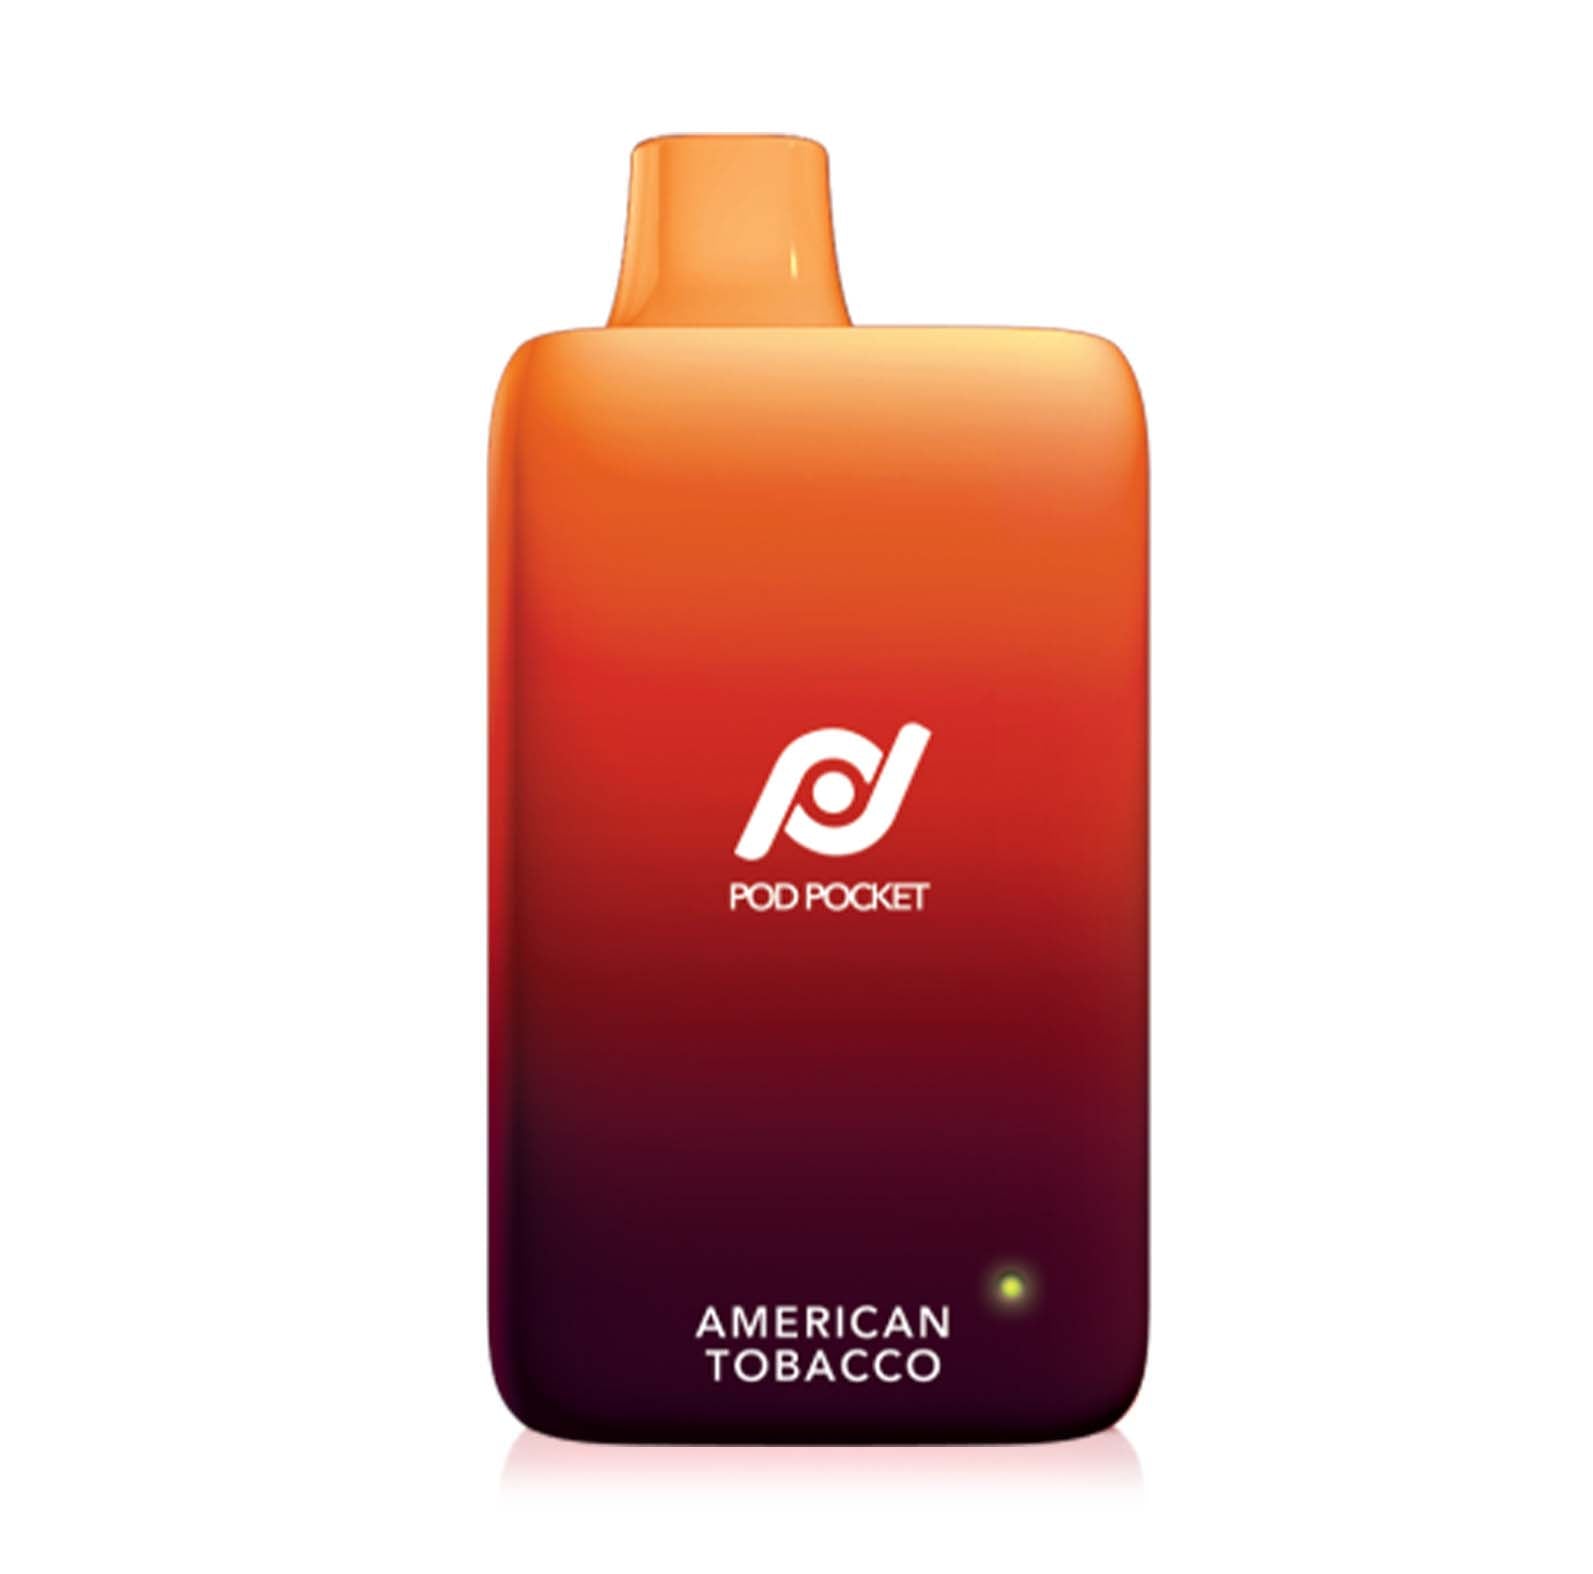 Pod Pocket 7500 Puff Disposable Vape | Free Shipping at Blankz - American Tobacco - BLANKZ!